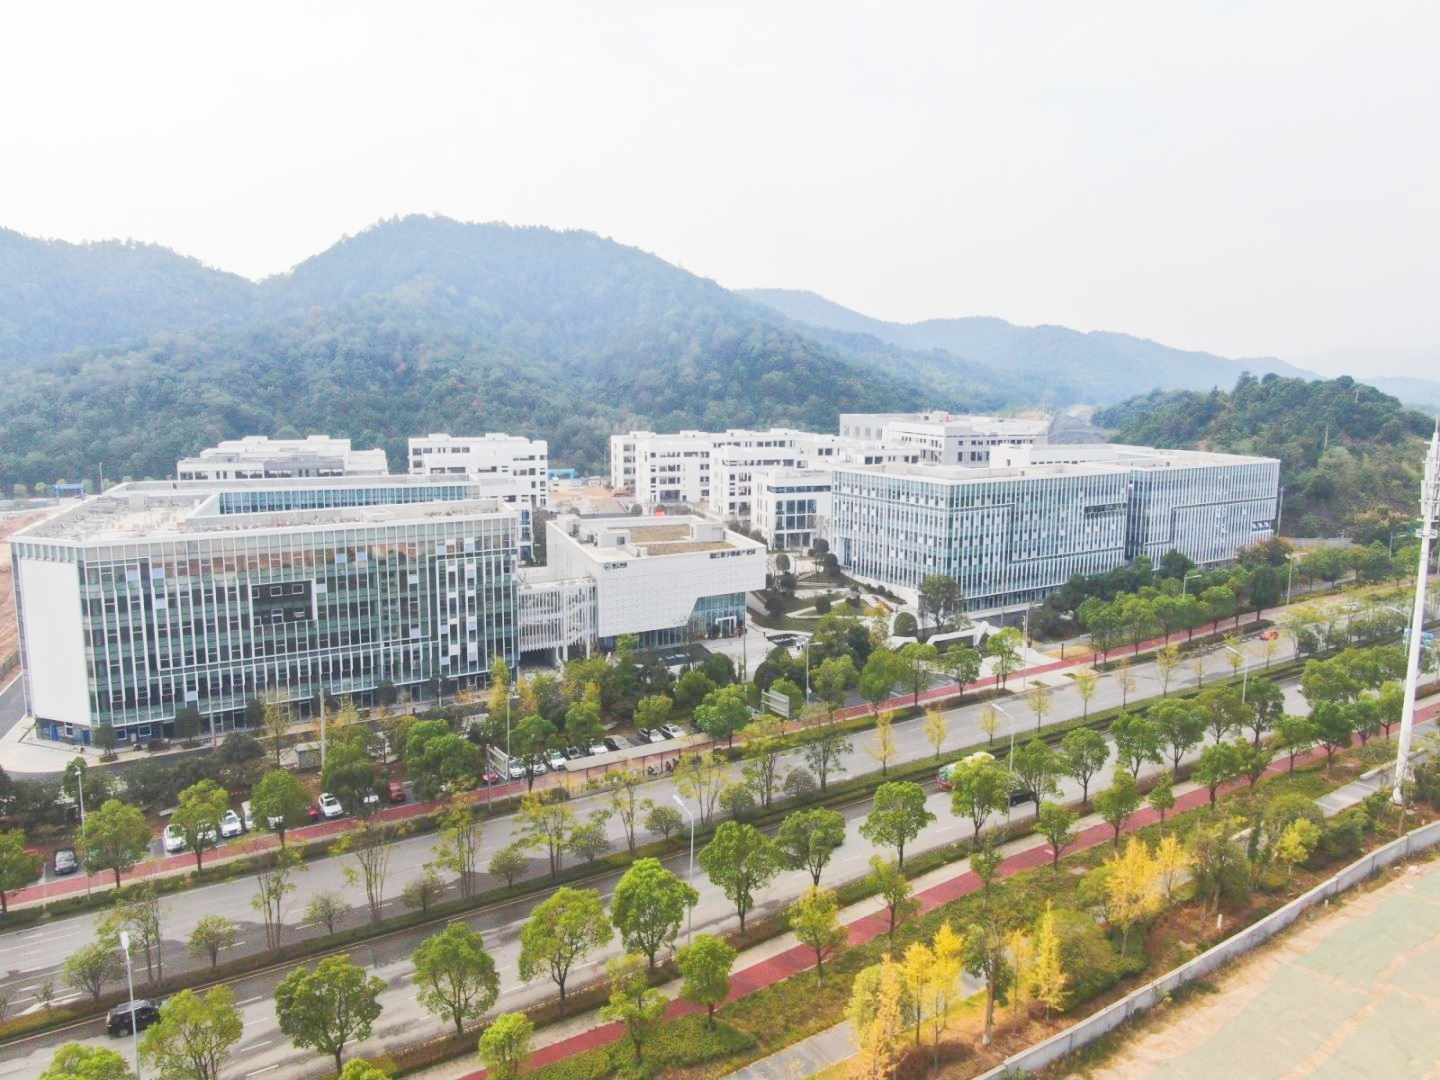 Changsha to bolster local development through AI technologies